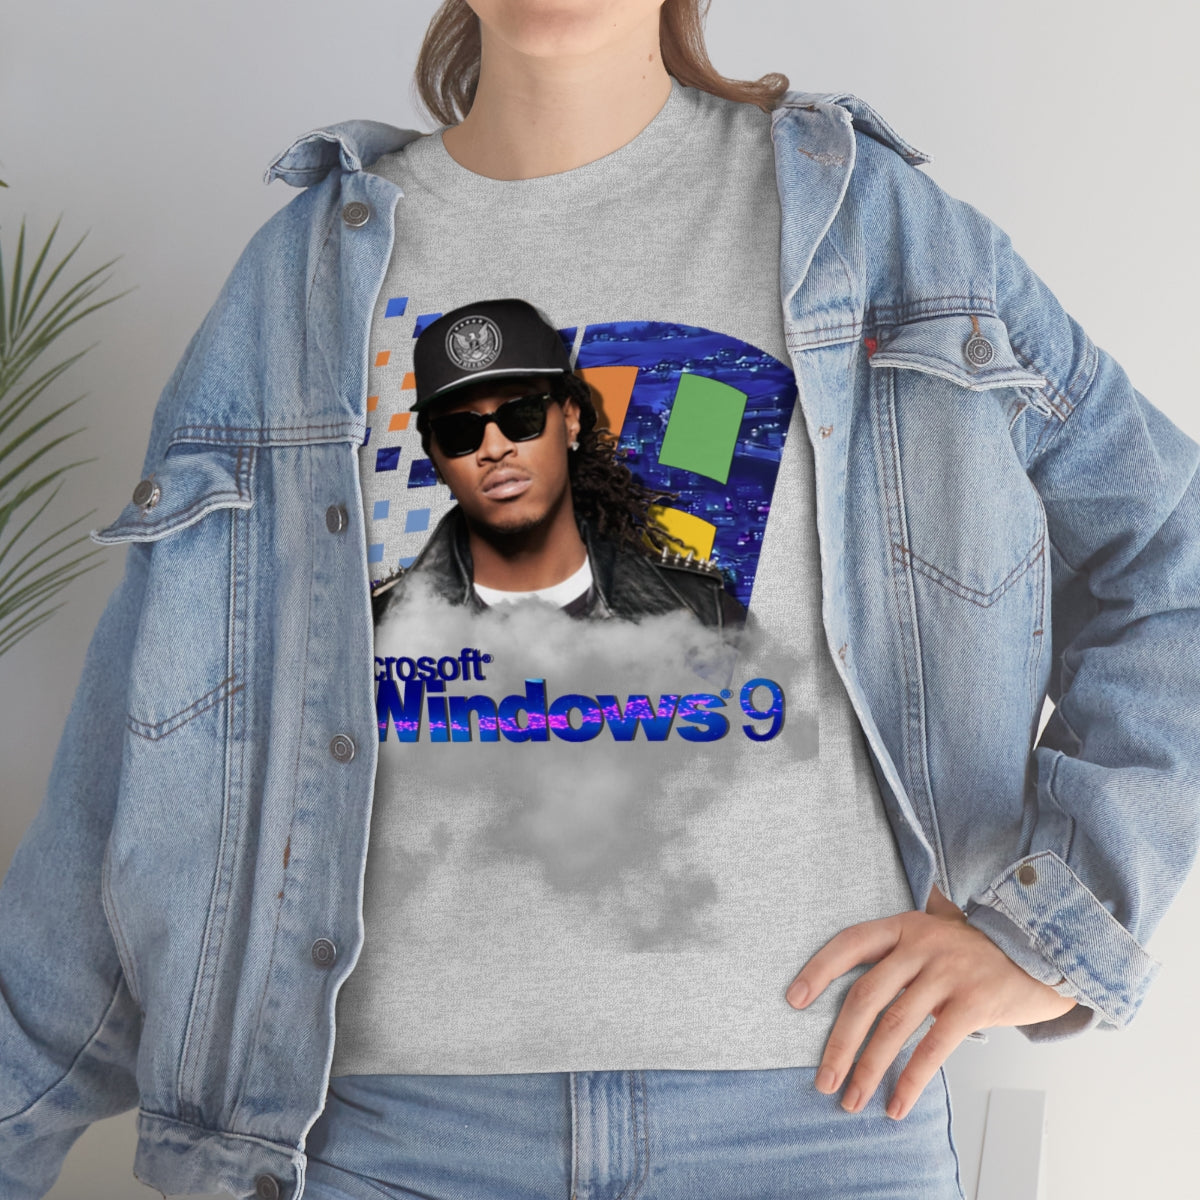 The Future of Windows 9 Shirt